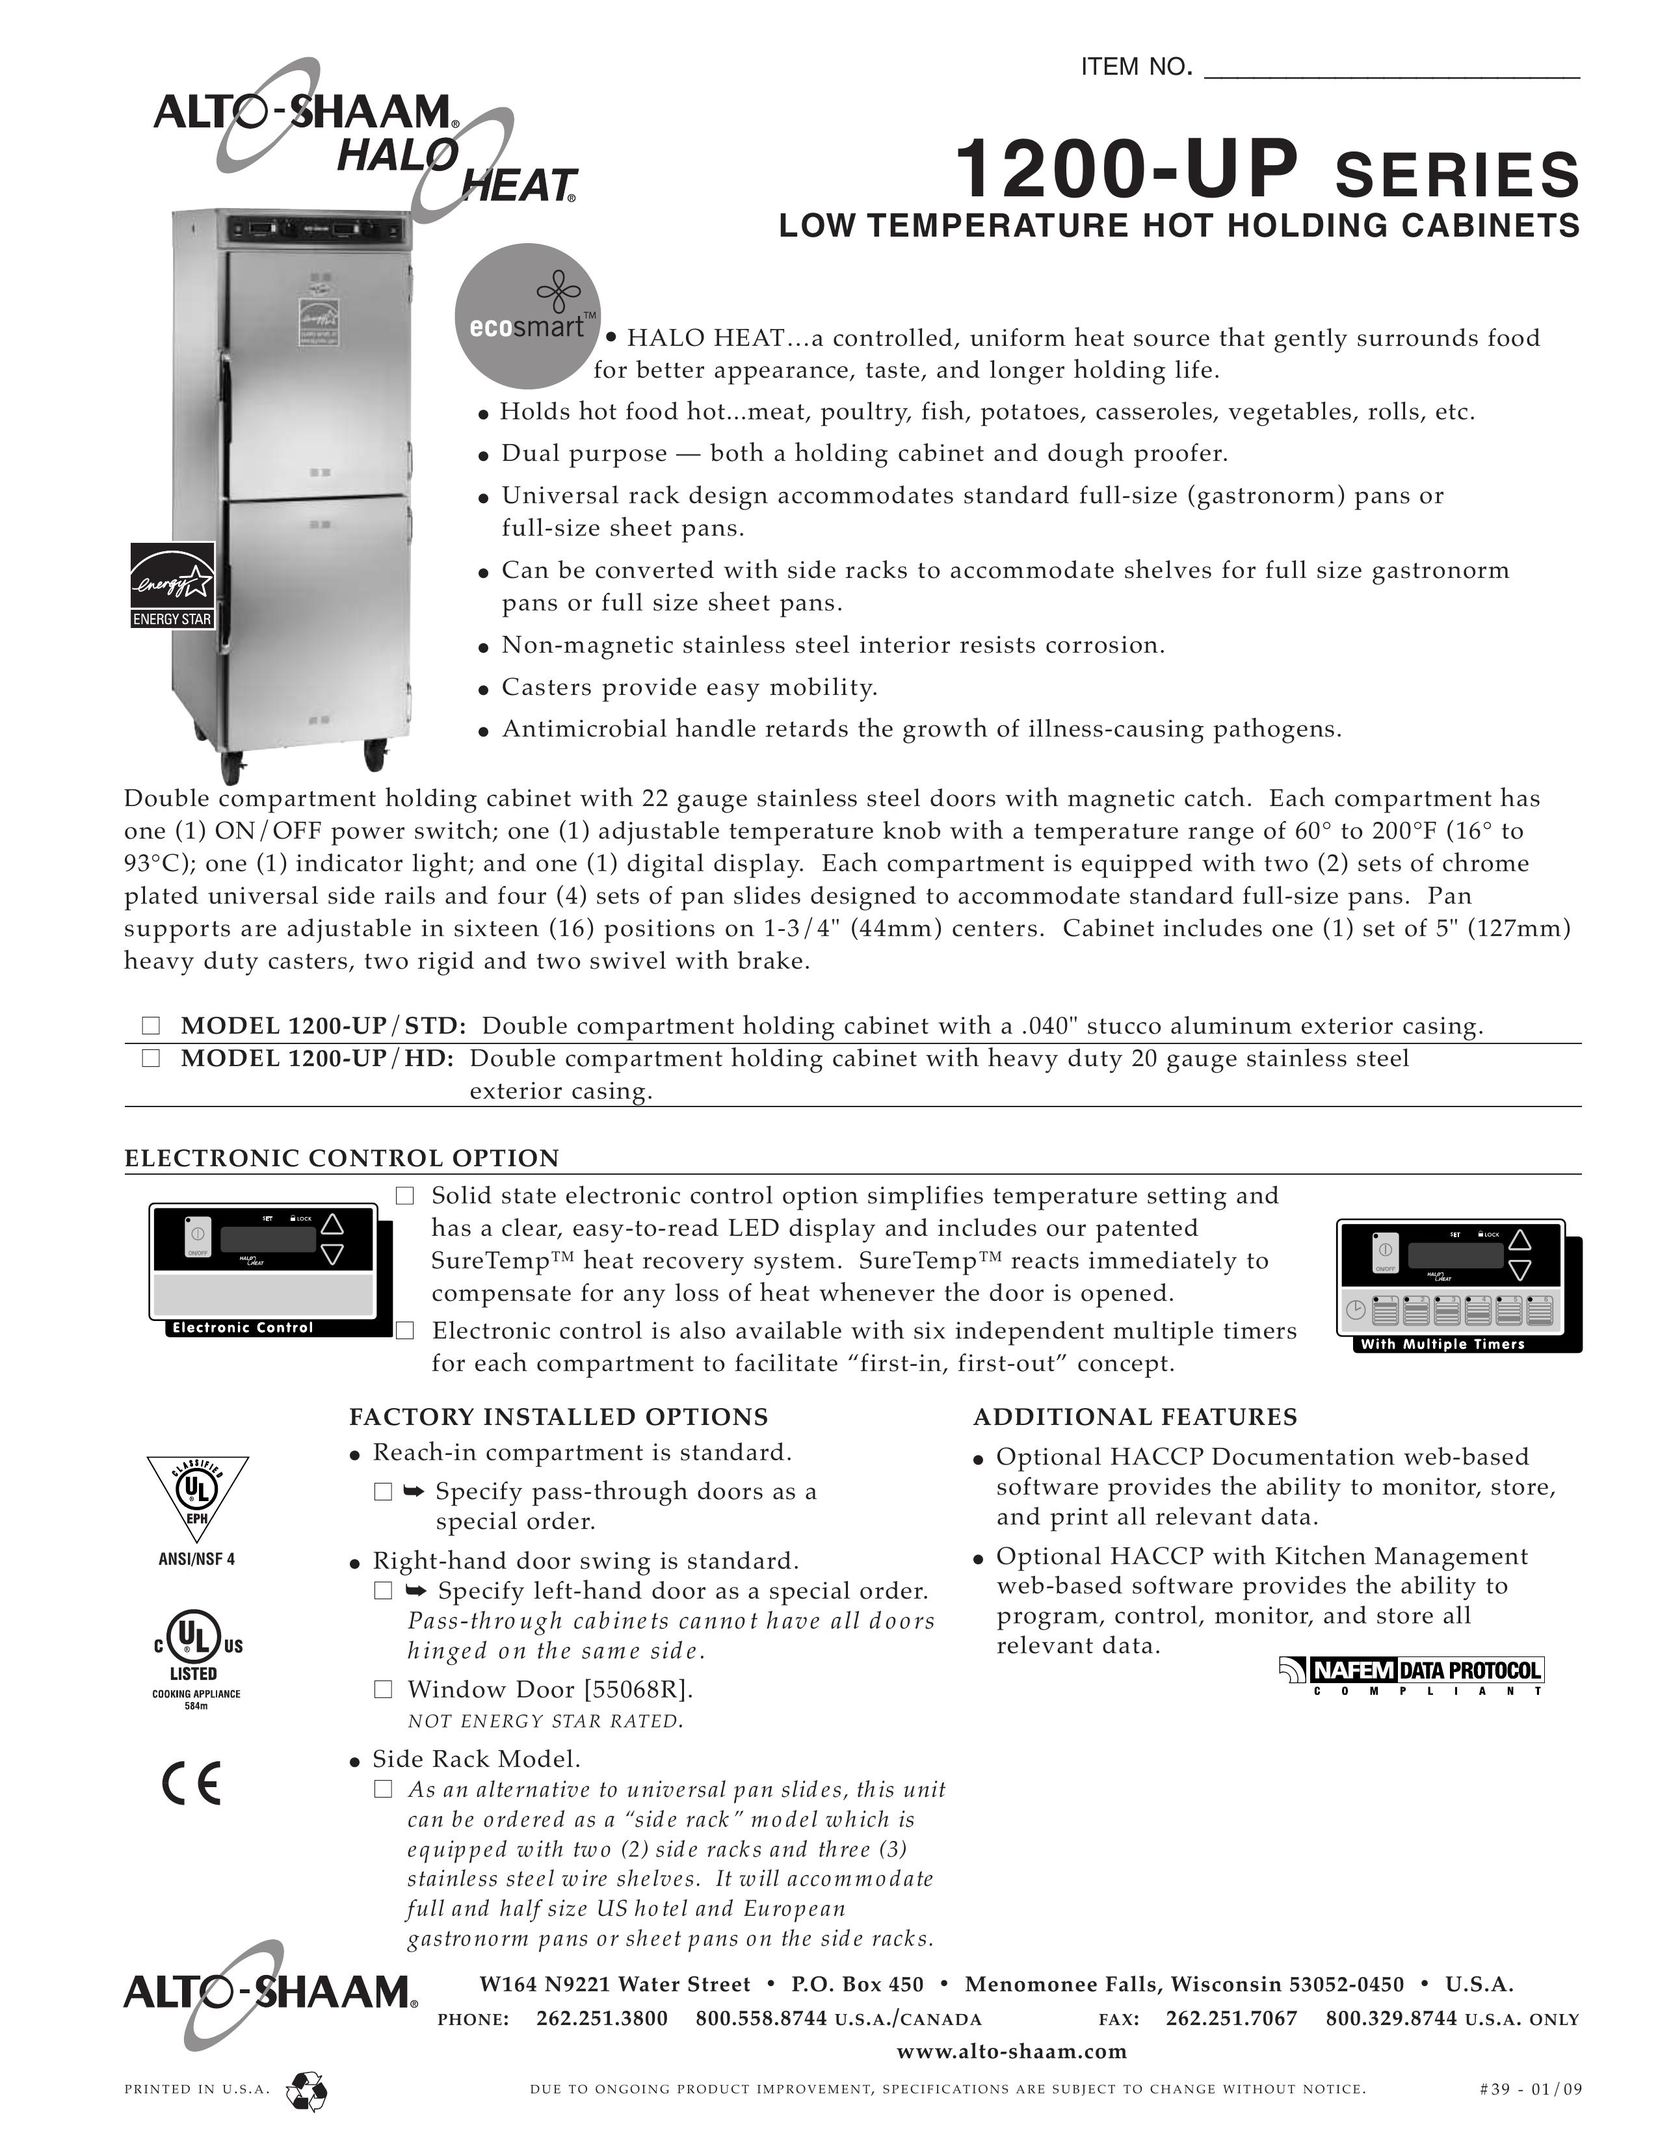 Alto-Shaam 1200-UP/HD Kitchen Entertainment Center User Manual